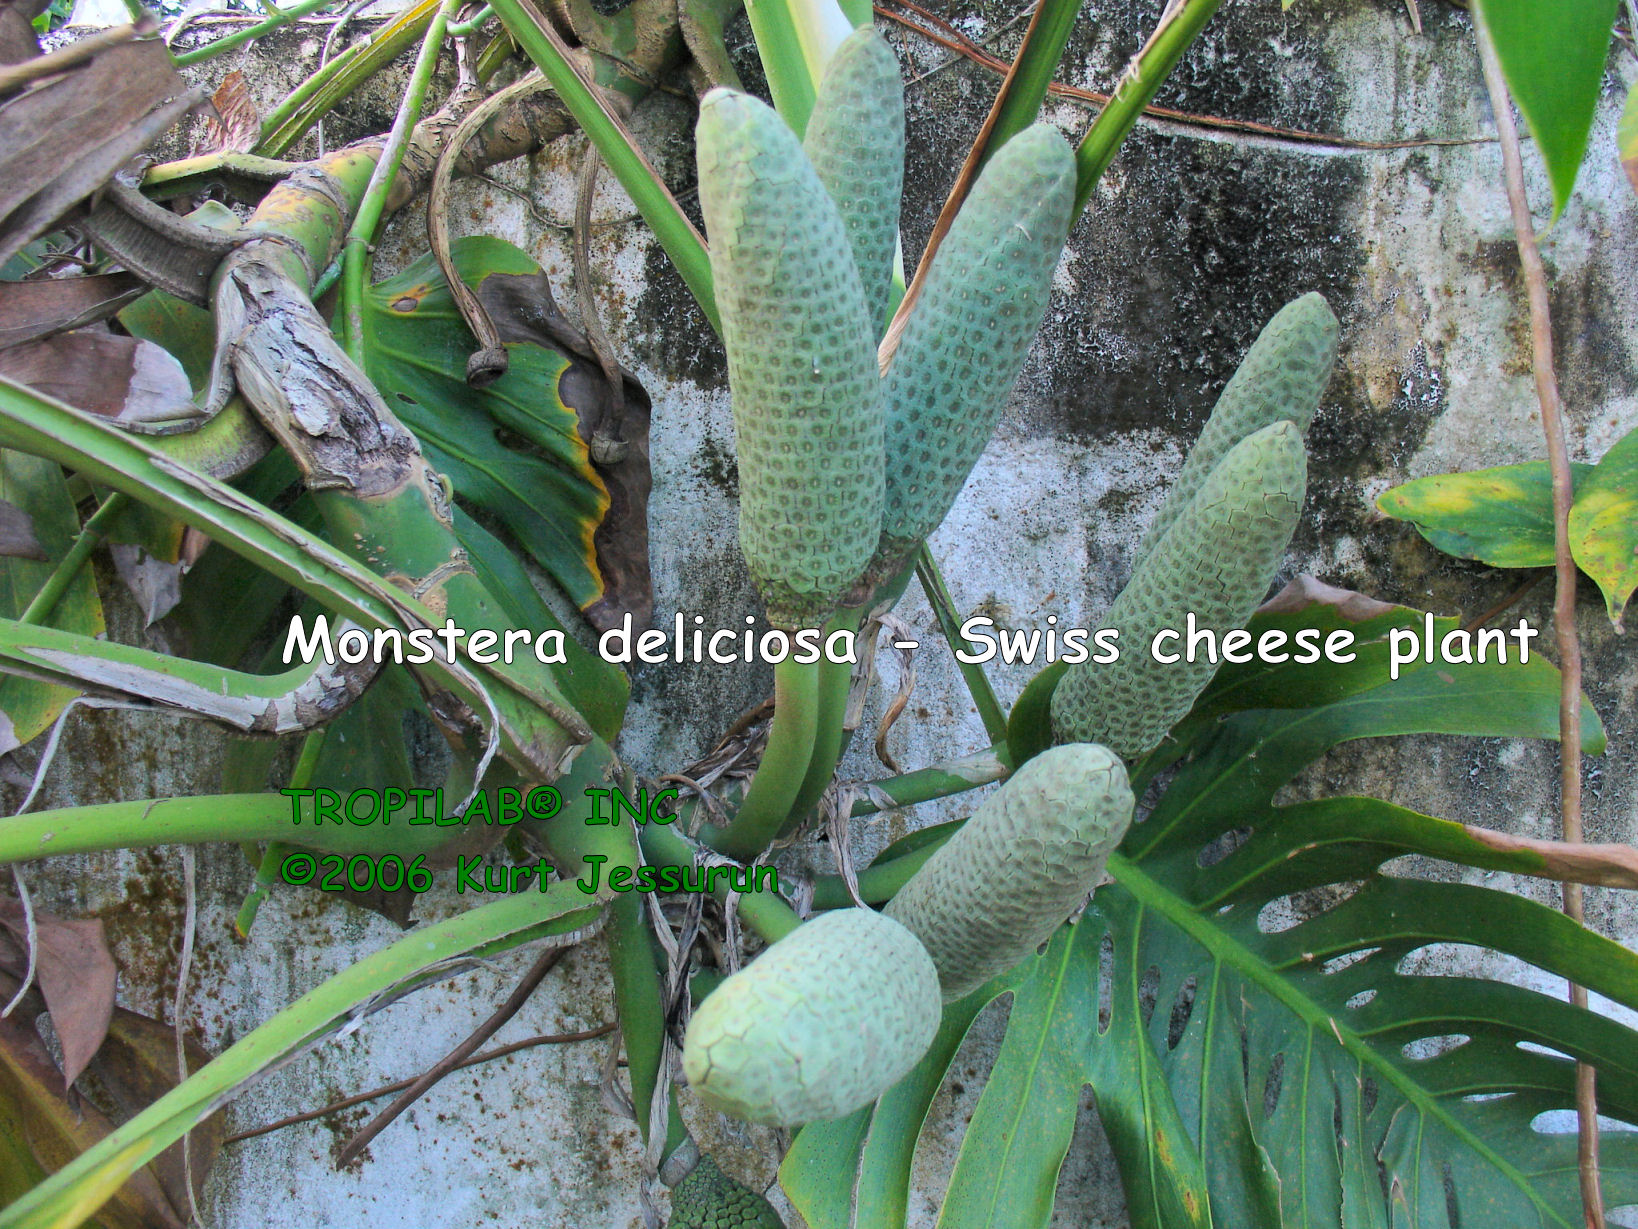 Monstera deliciosa - Swiss cheese plant fruits